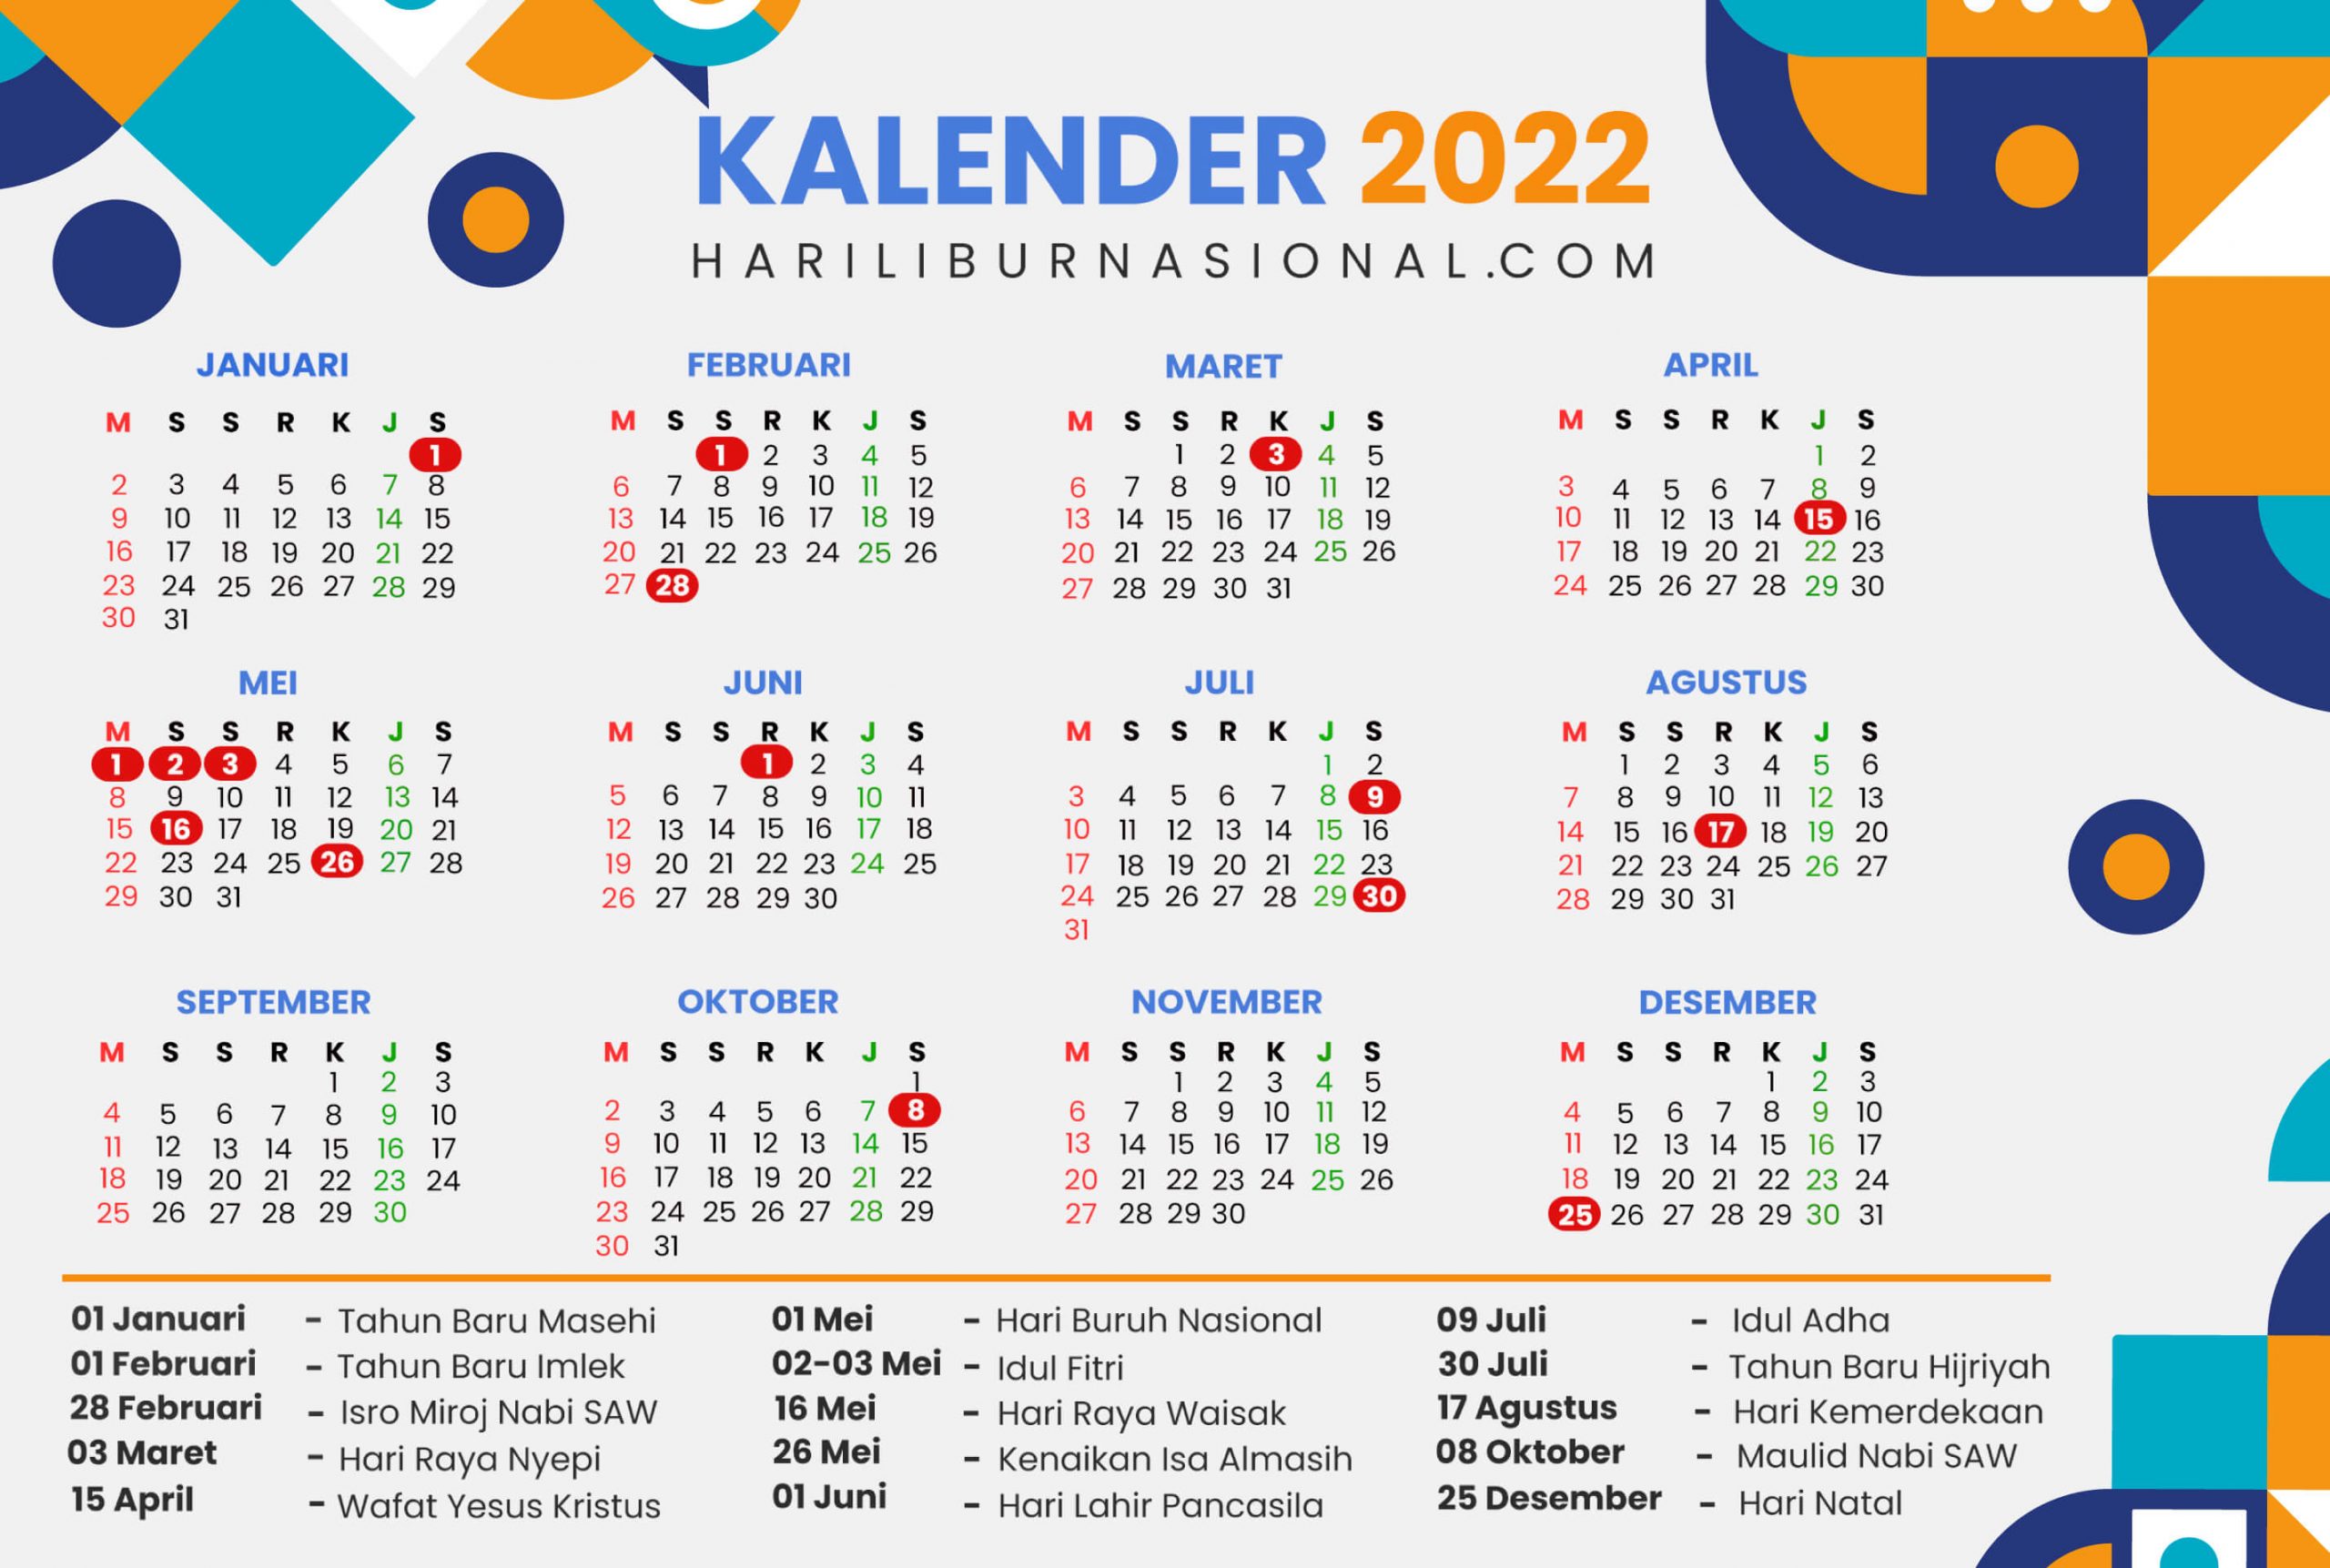 Kalender 2022 lengkap